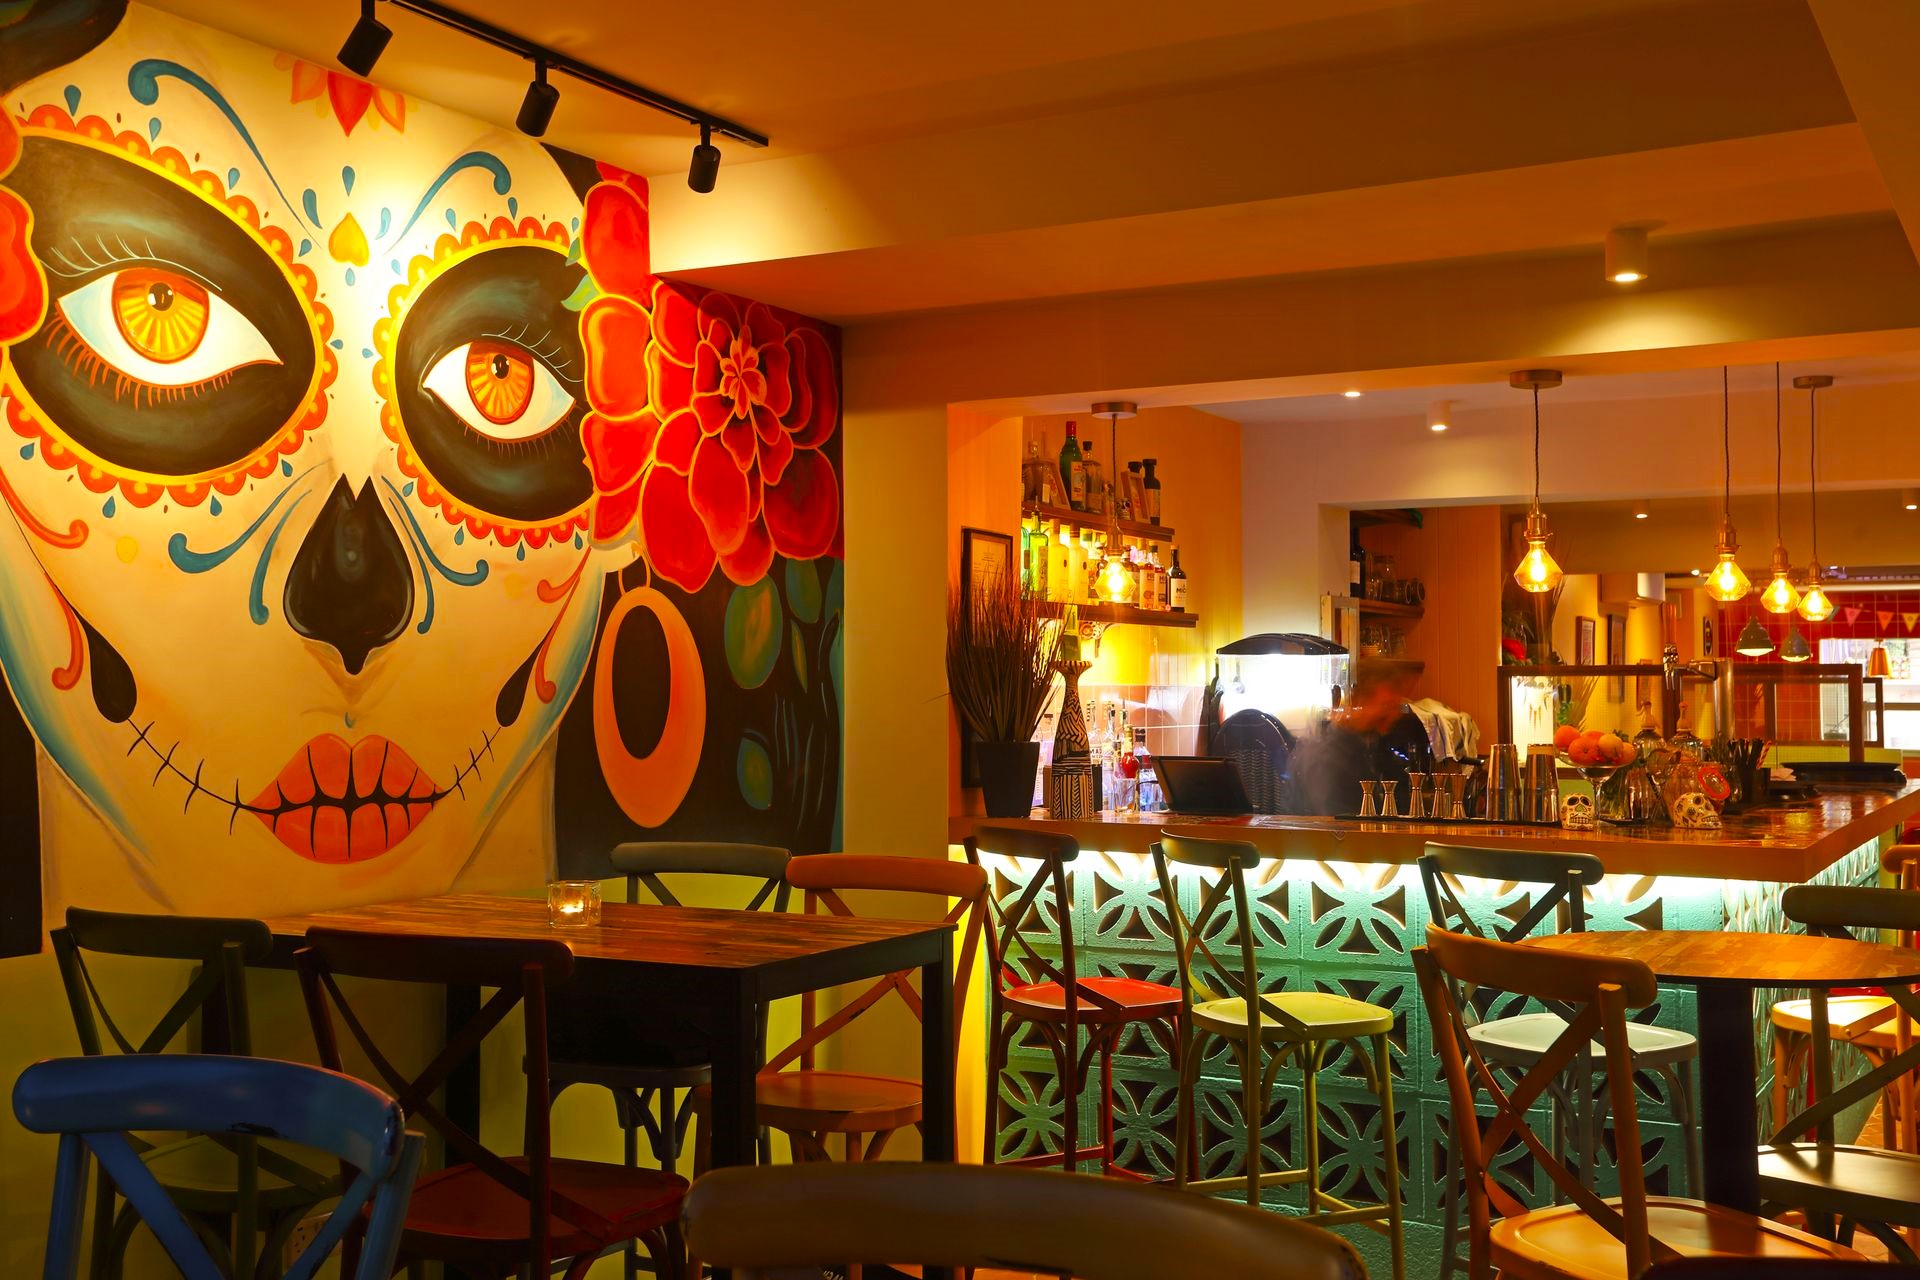 bar-and-tables-inside-cantina-del-barrio-mexican-restaurant